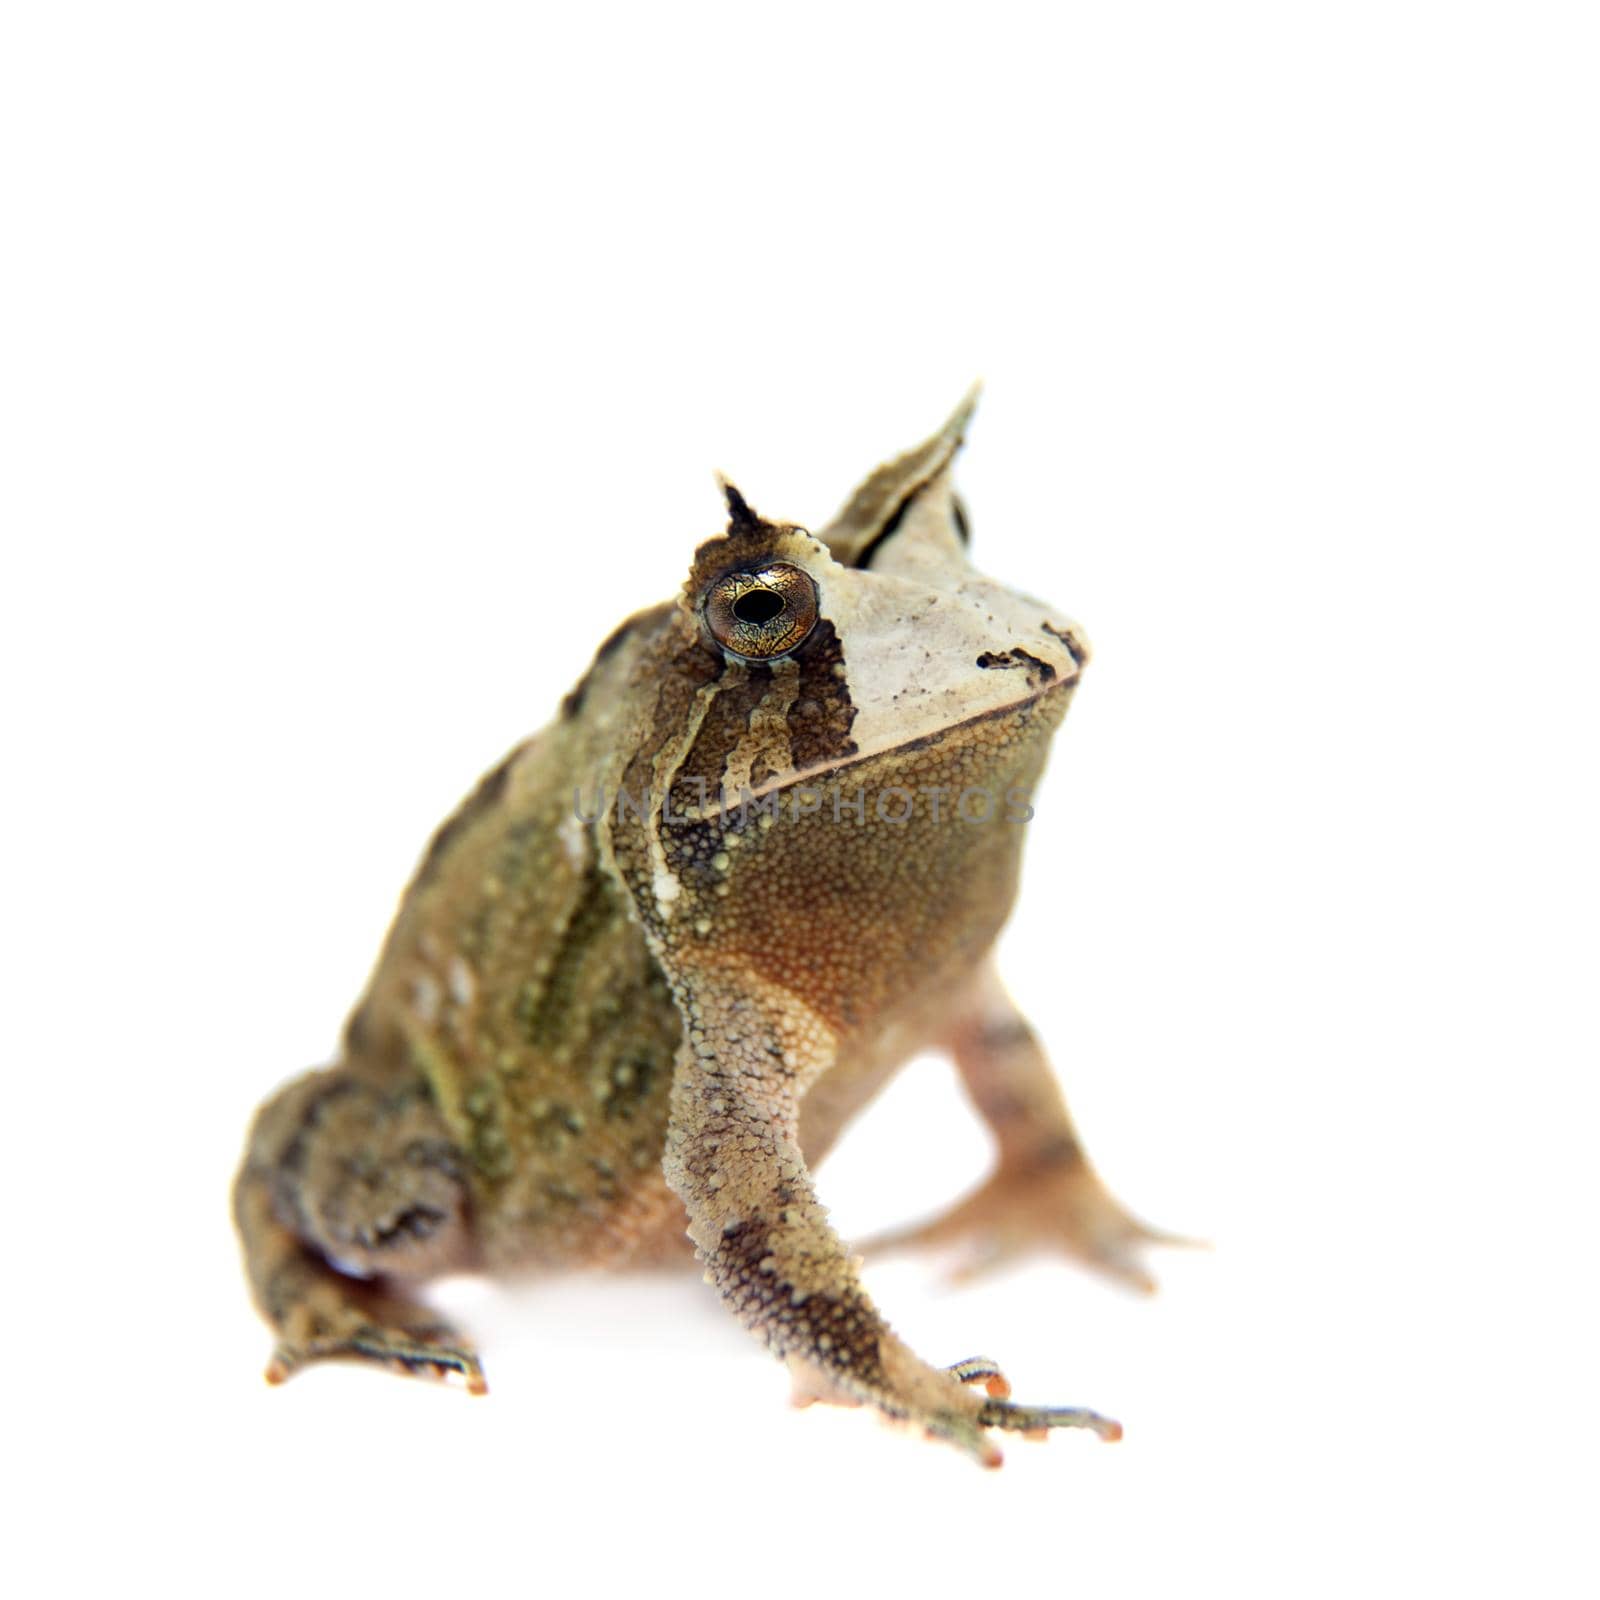 Cerrado toad on white by RosaJay